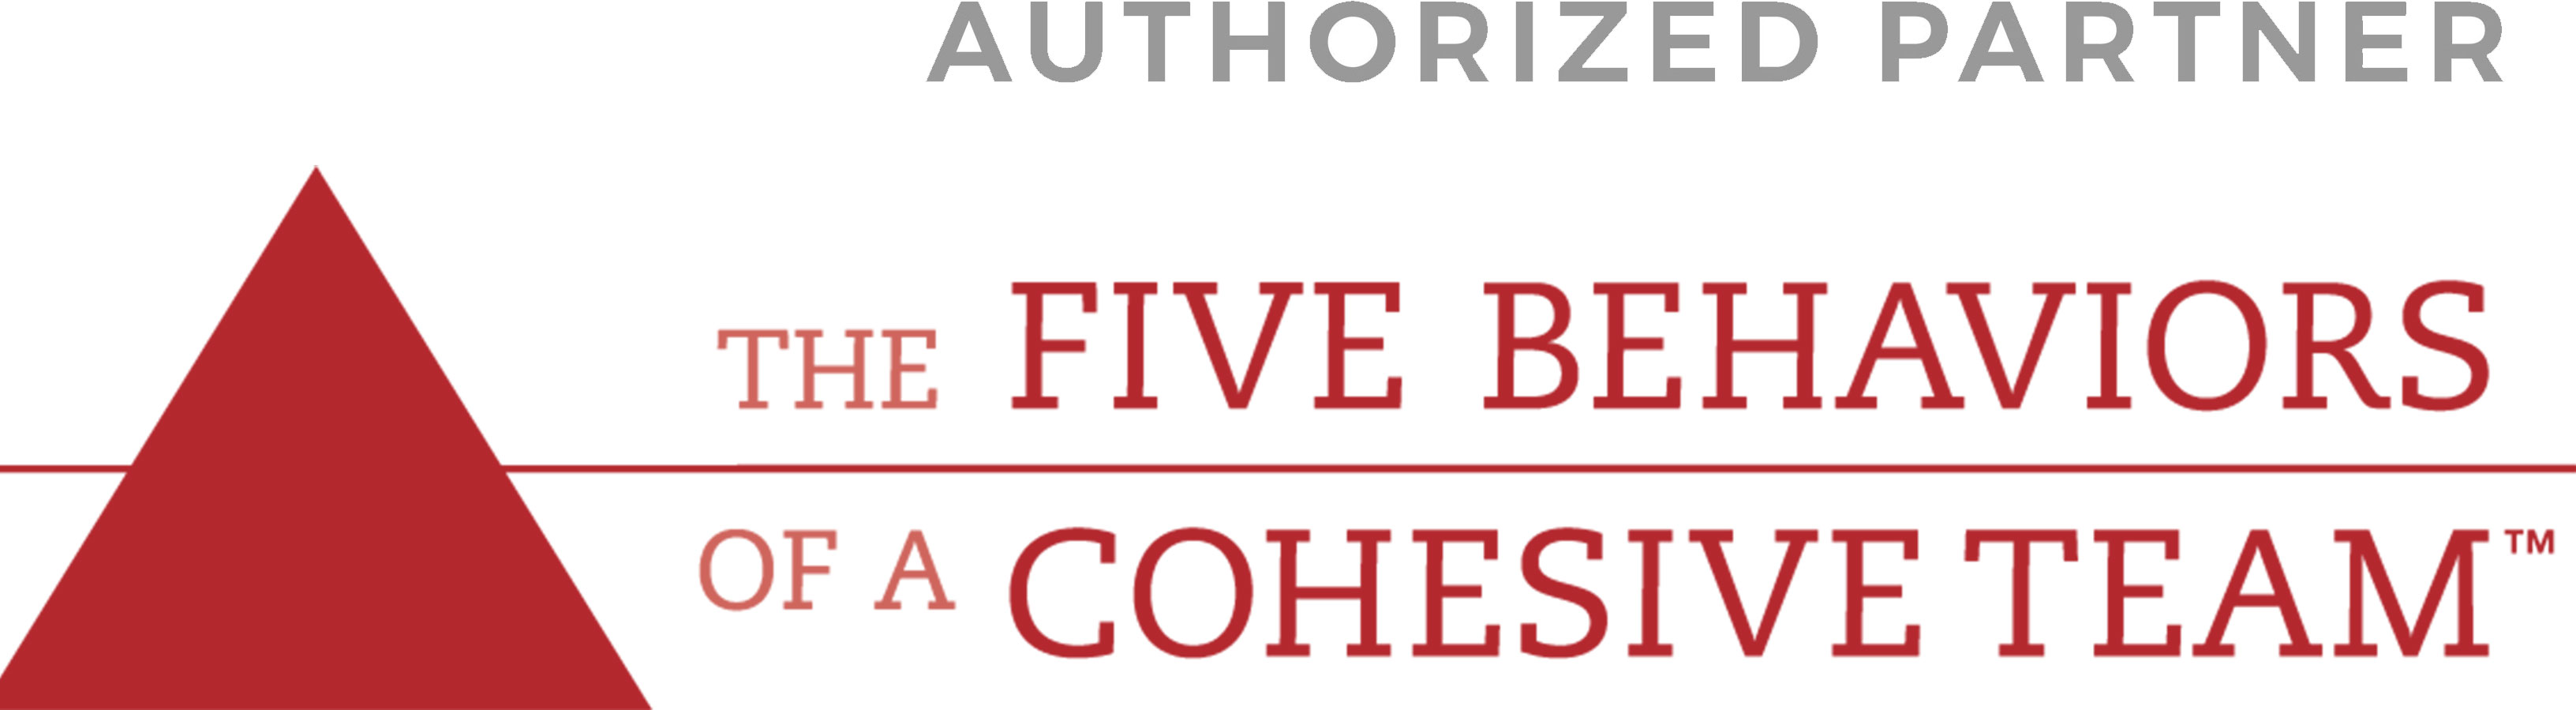 Five Behaviors of a Cohesive Team™ Authorized Partner